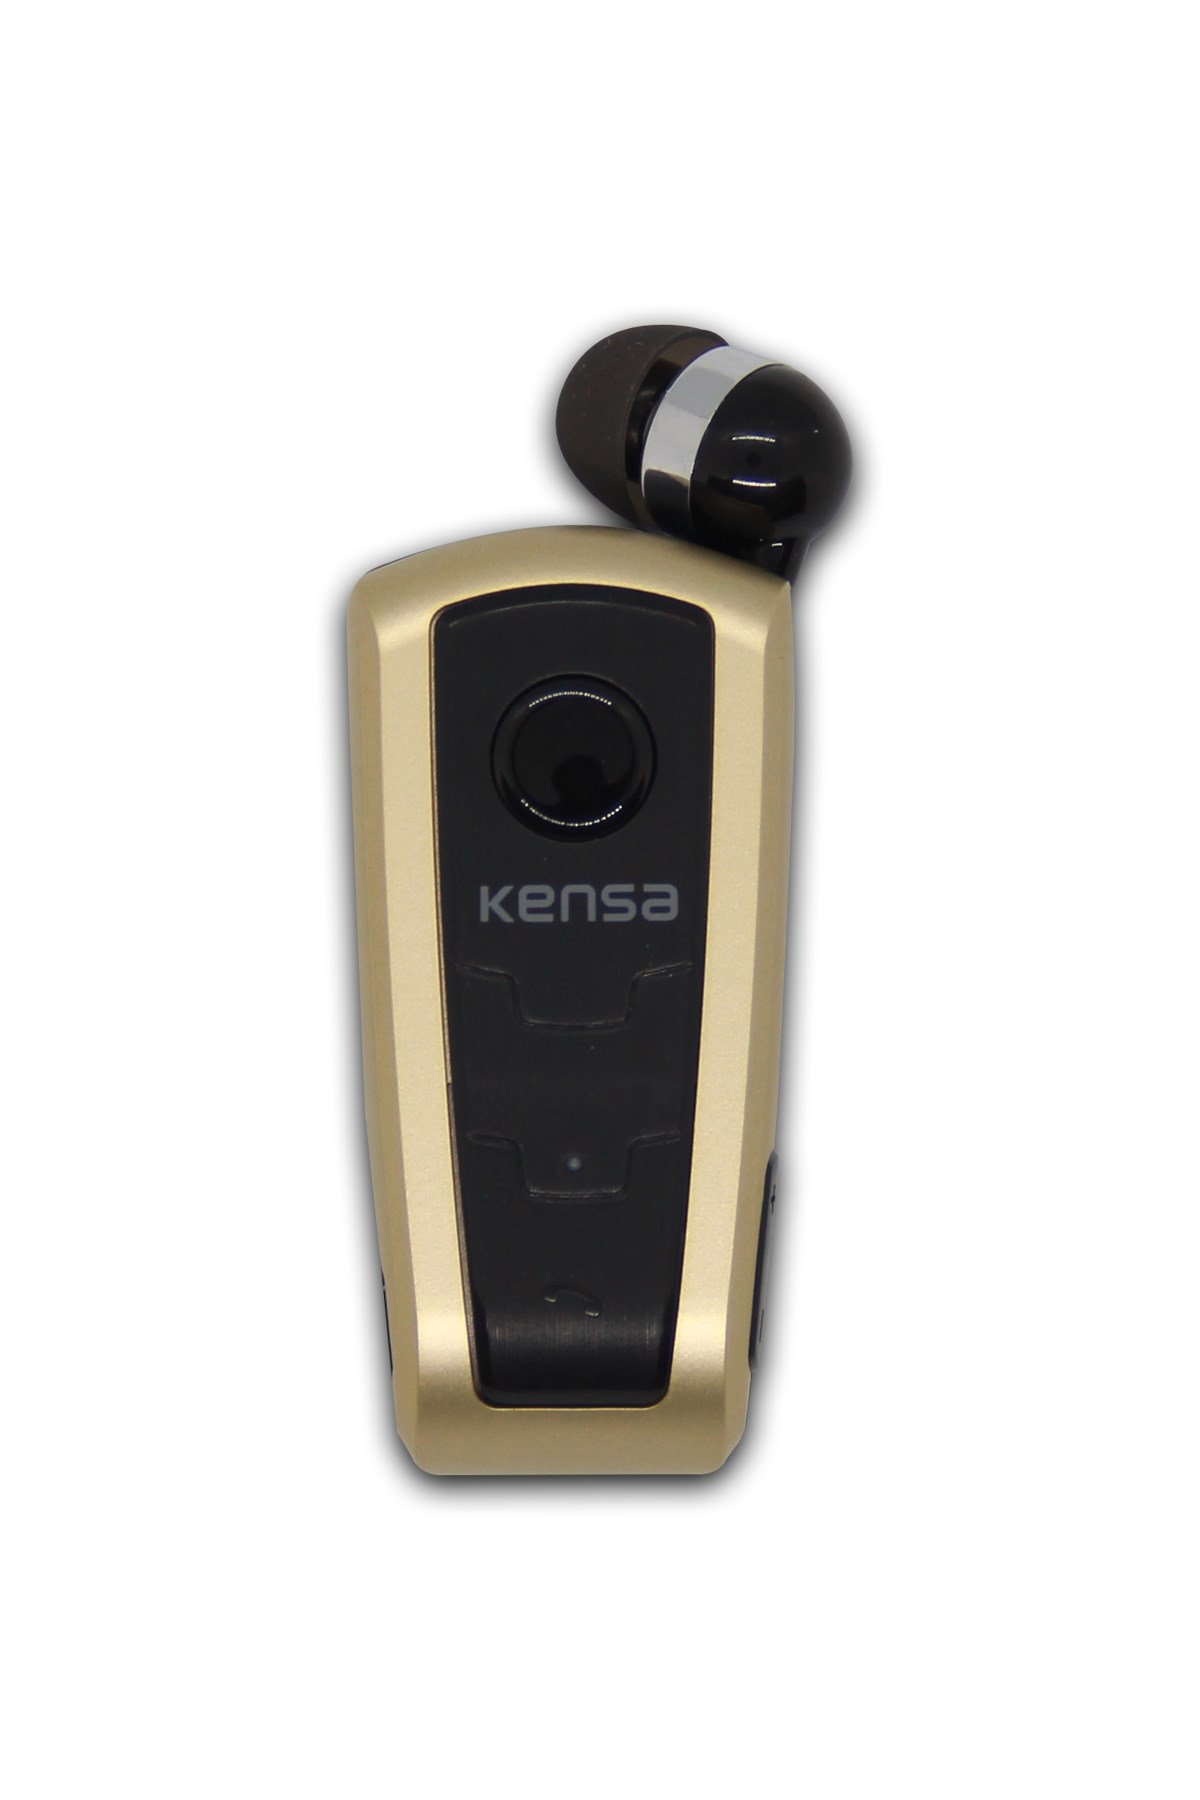 Kensa KB-200 Bluetooth Makaralı Titreşimli Kulak İçi Kulaklık